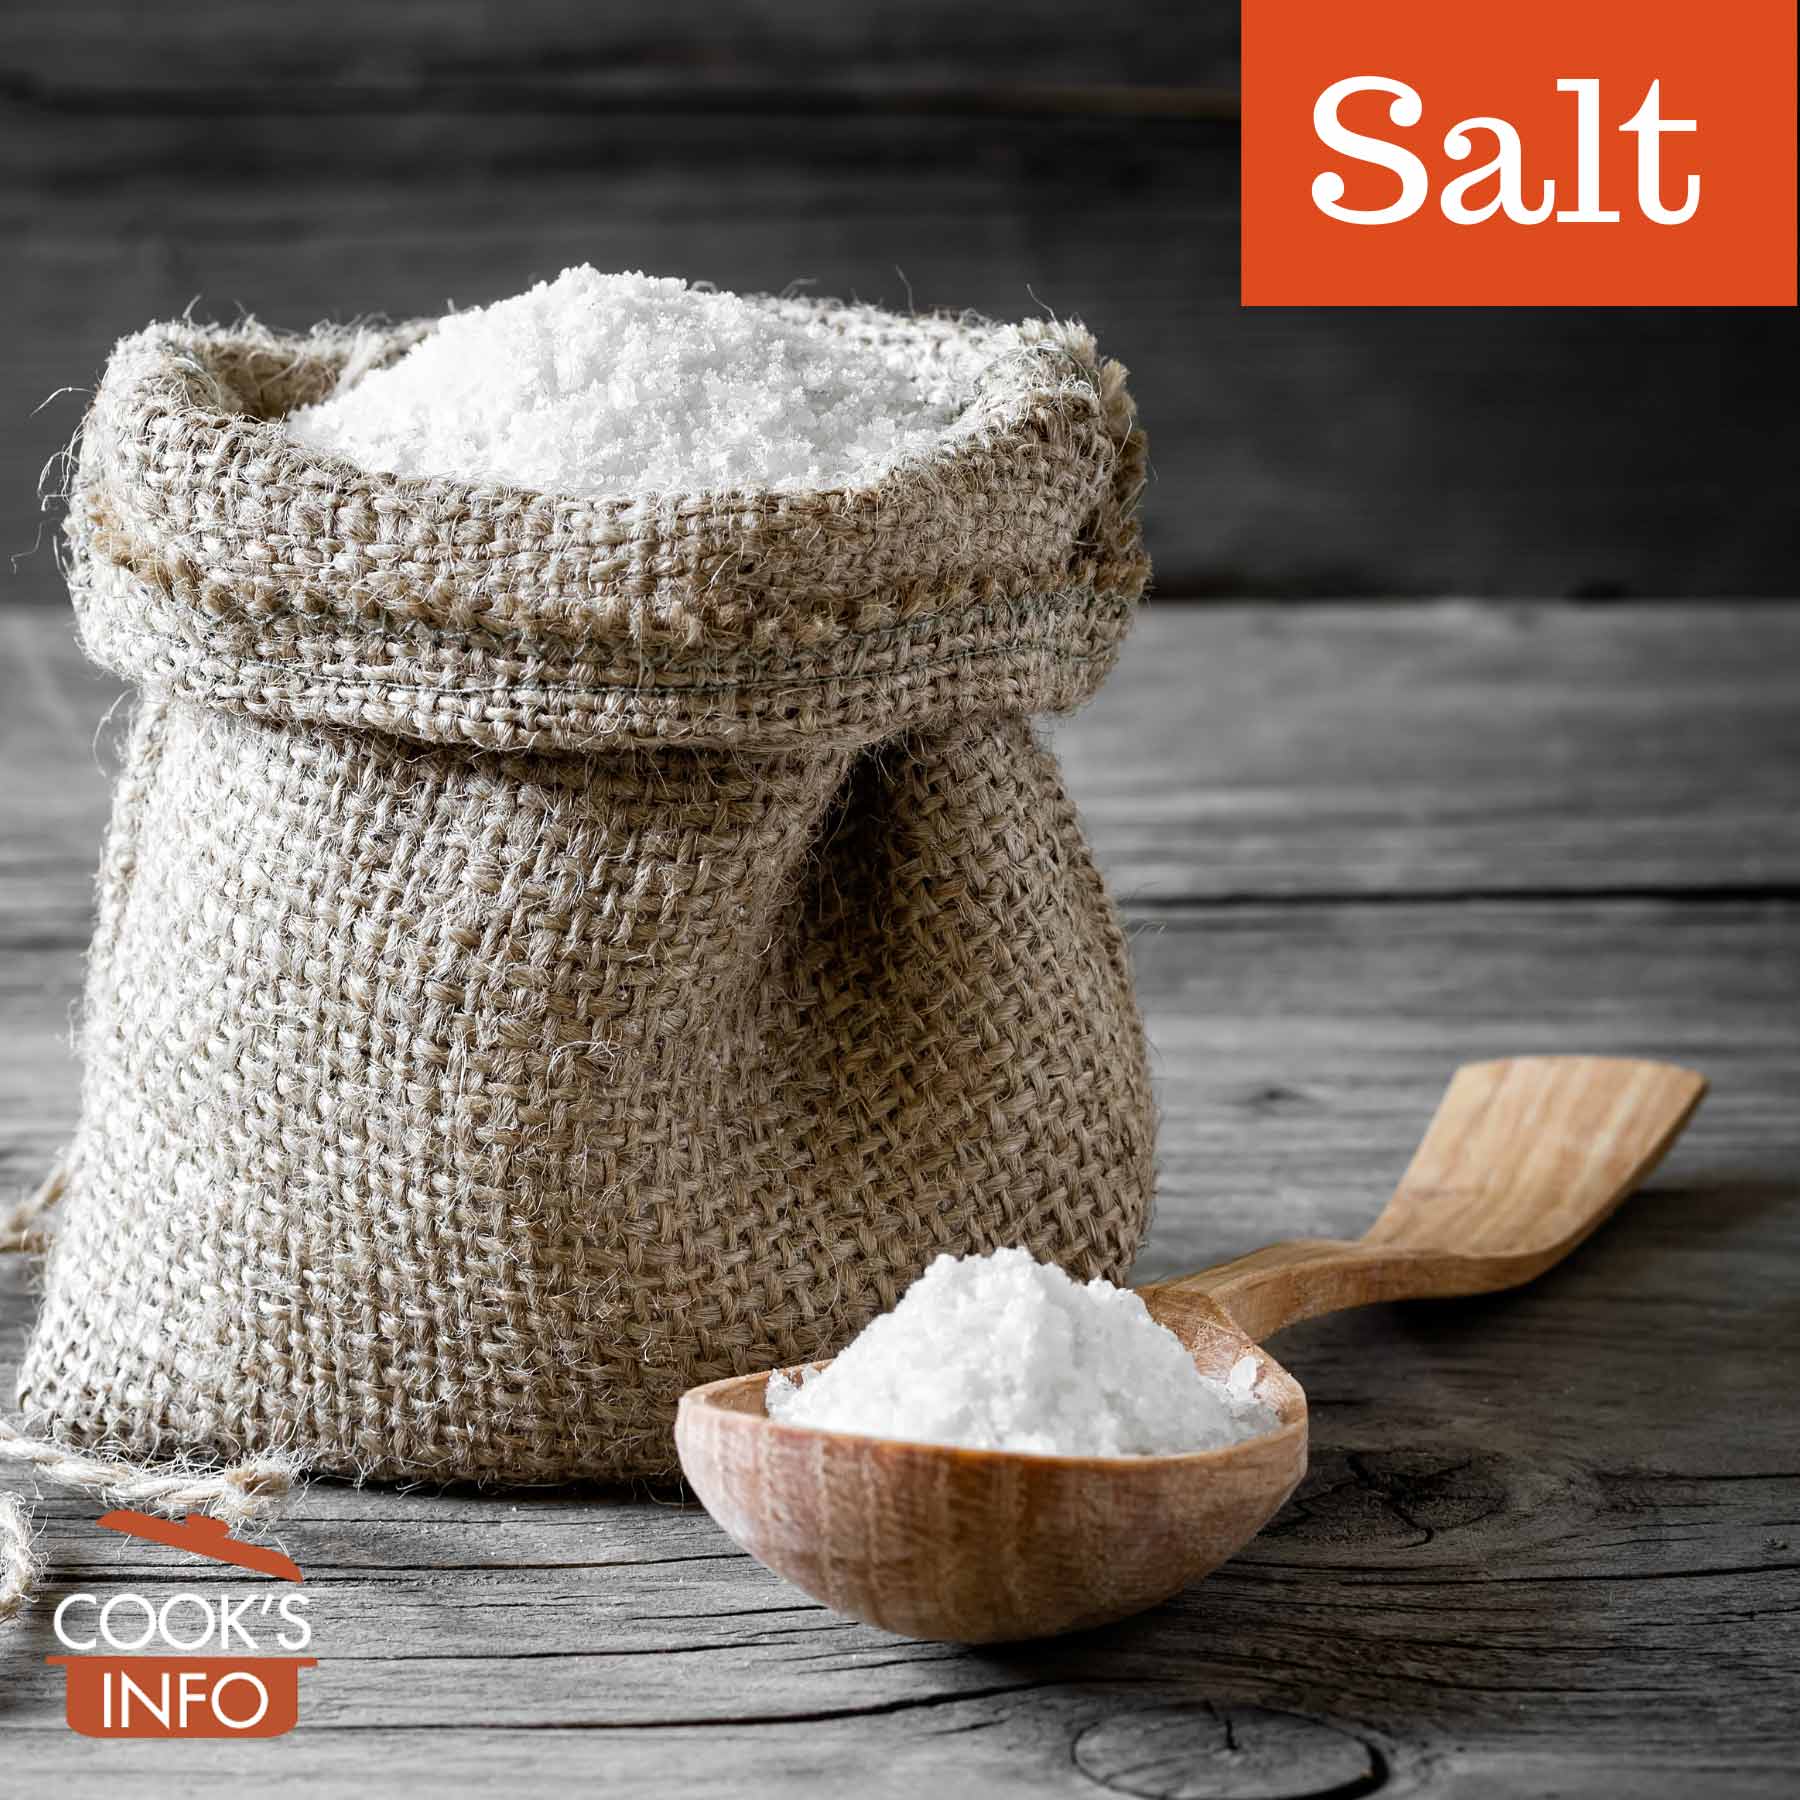 Bag of salt and spoonful of salt